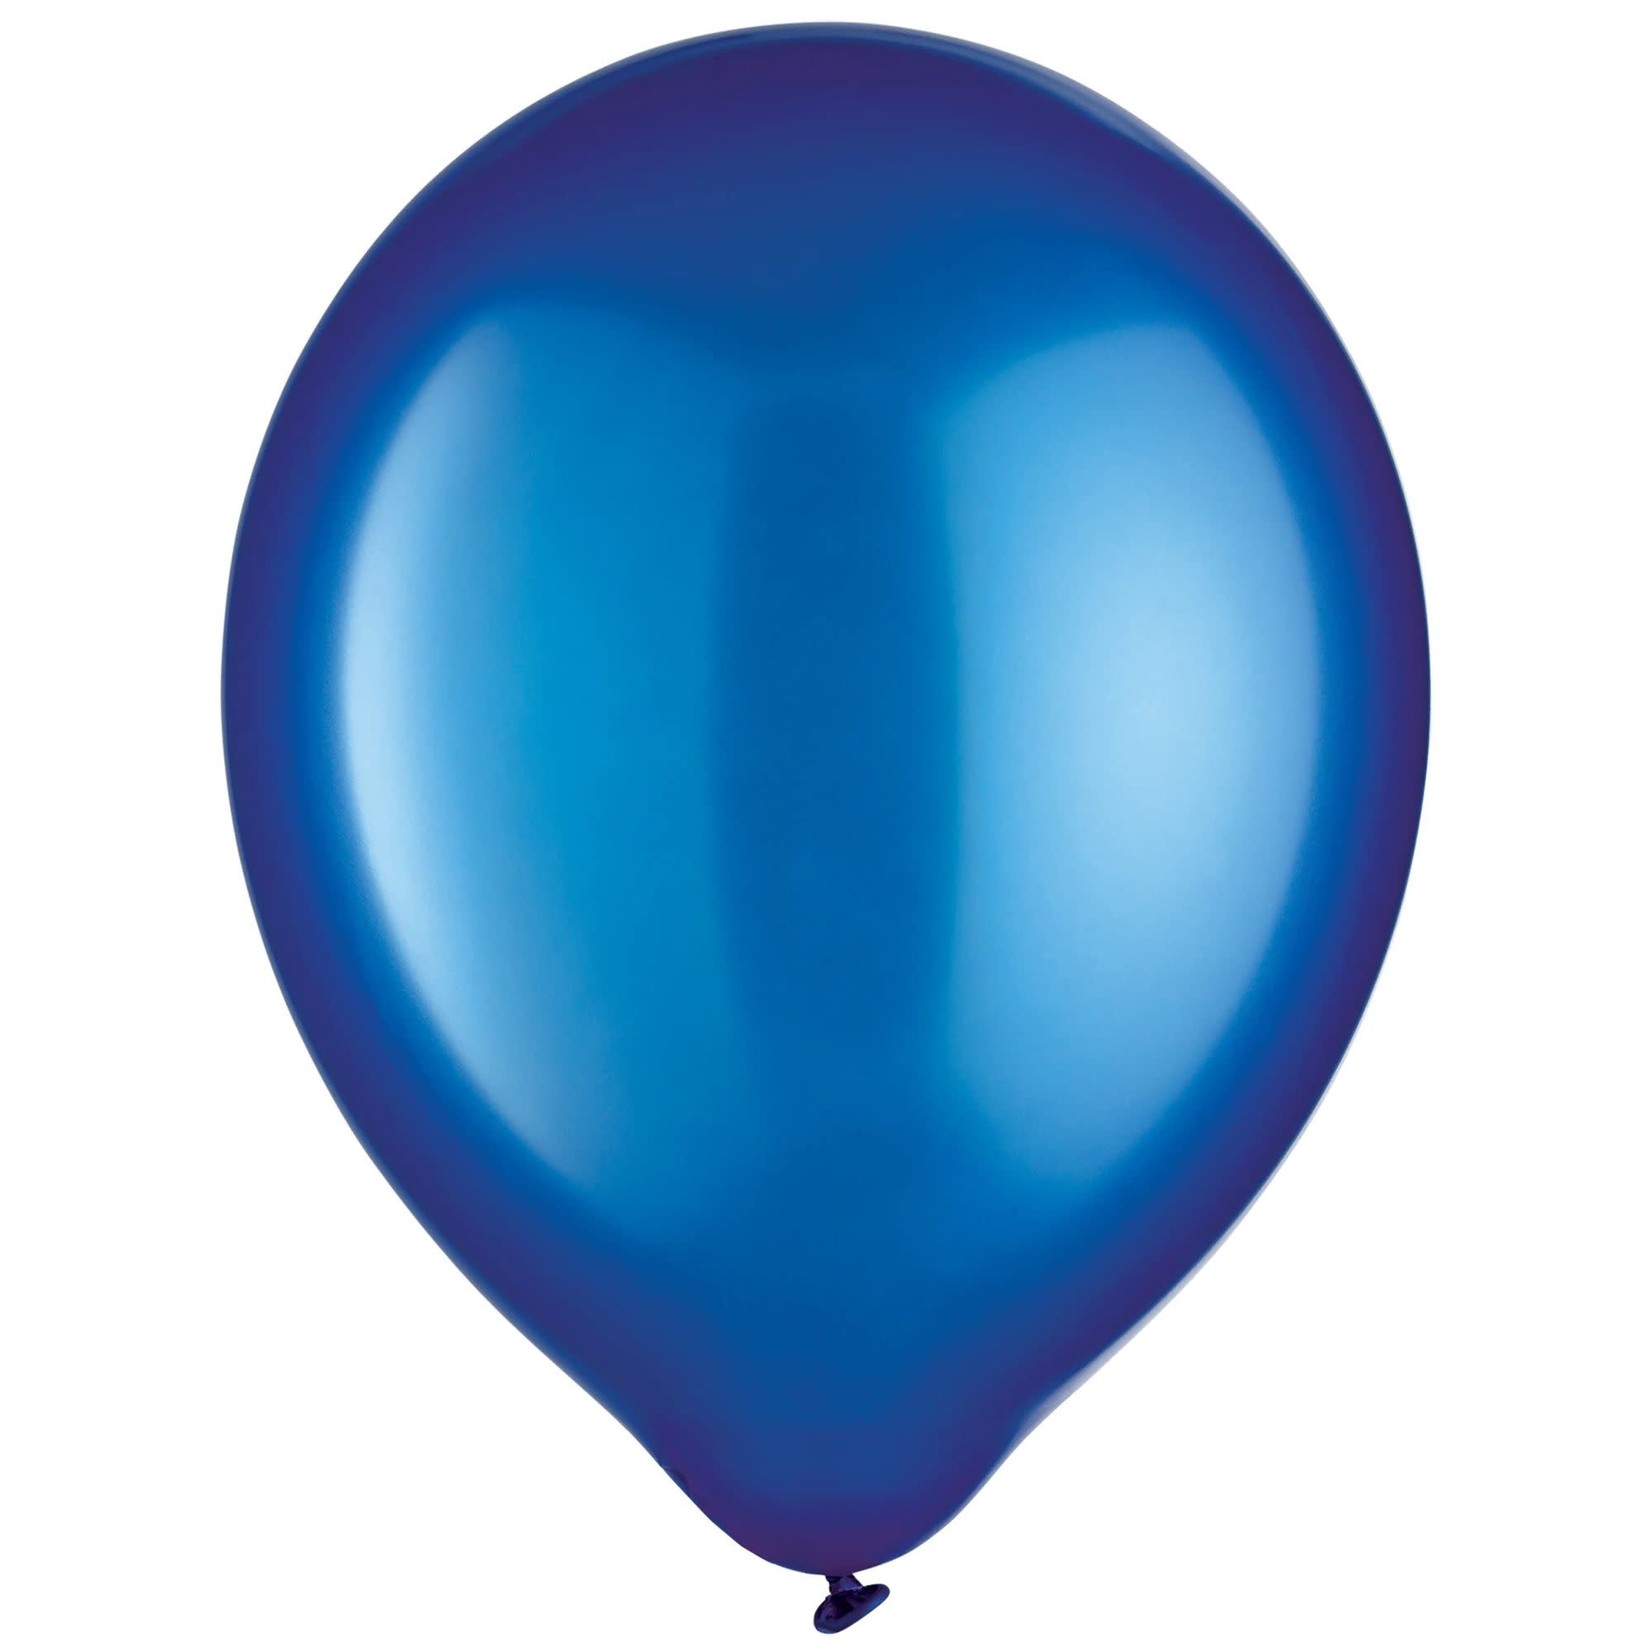 Bright Royal Blue Pearlized Latex Balloons - Bulk